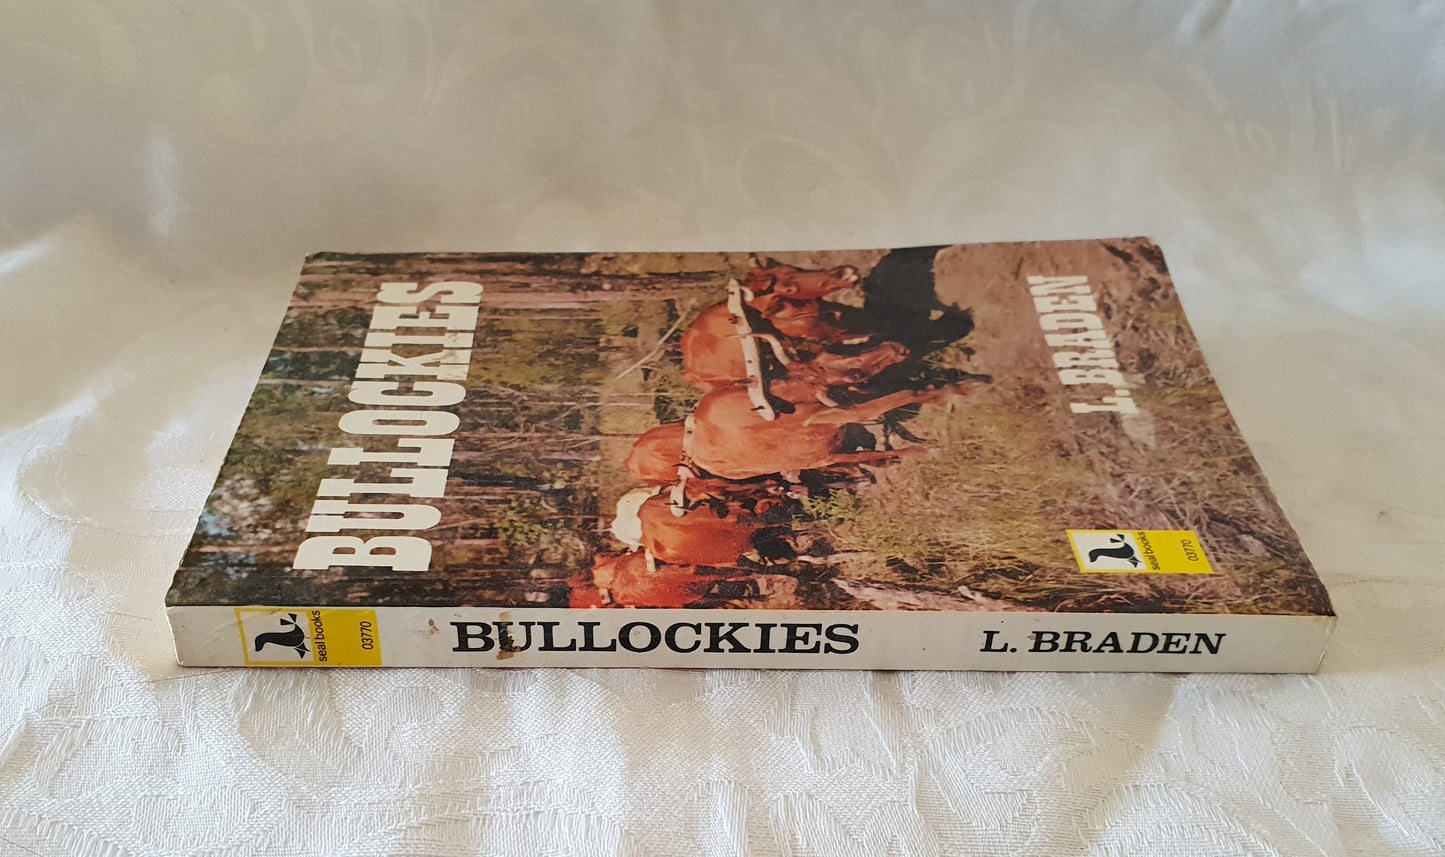 Bullockies by L. Braden